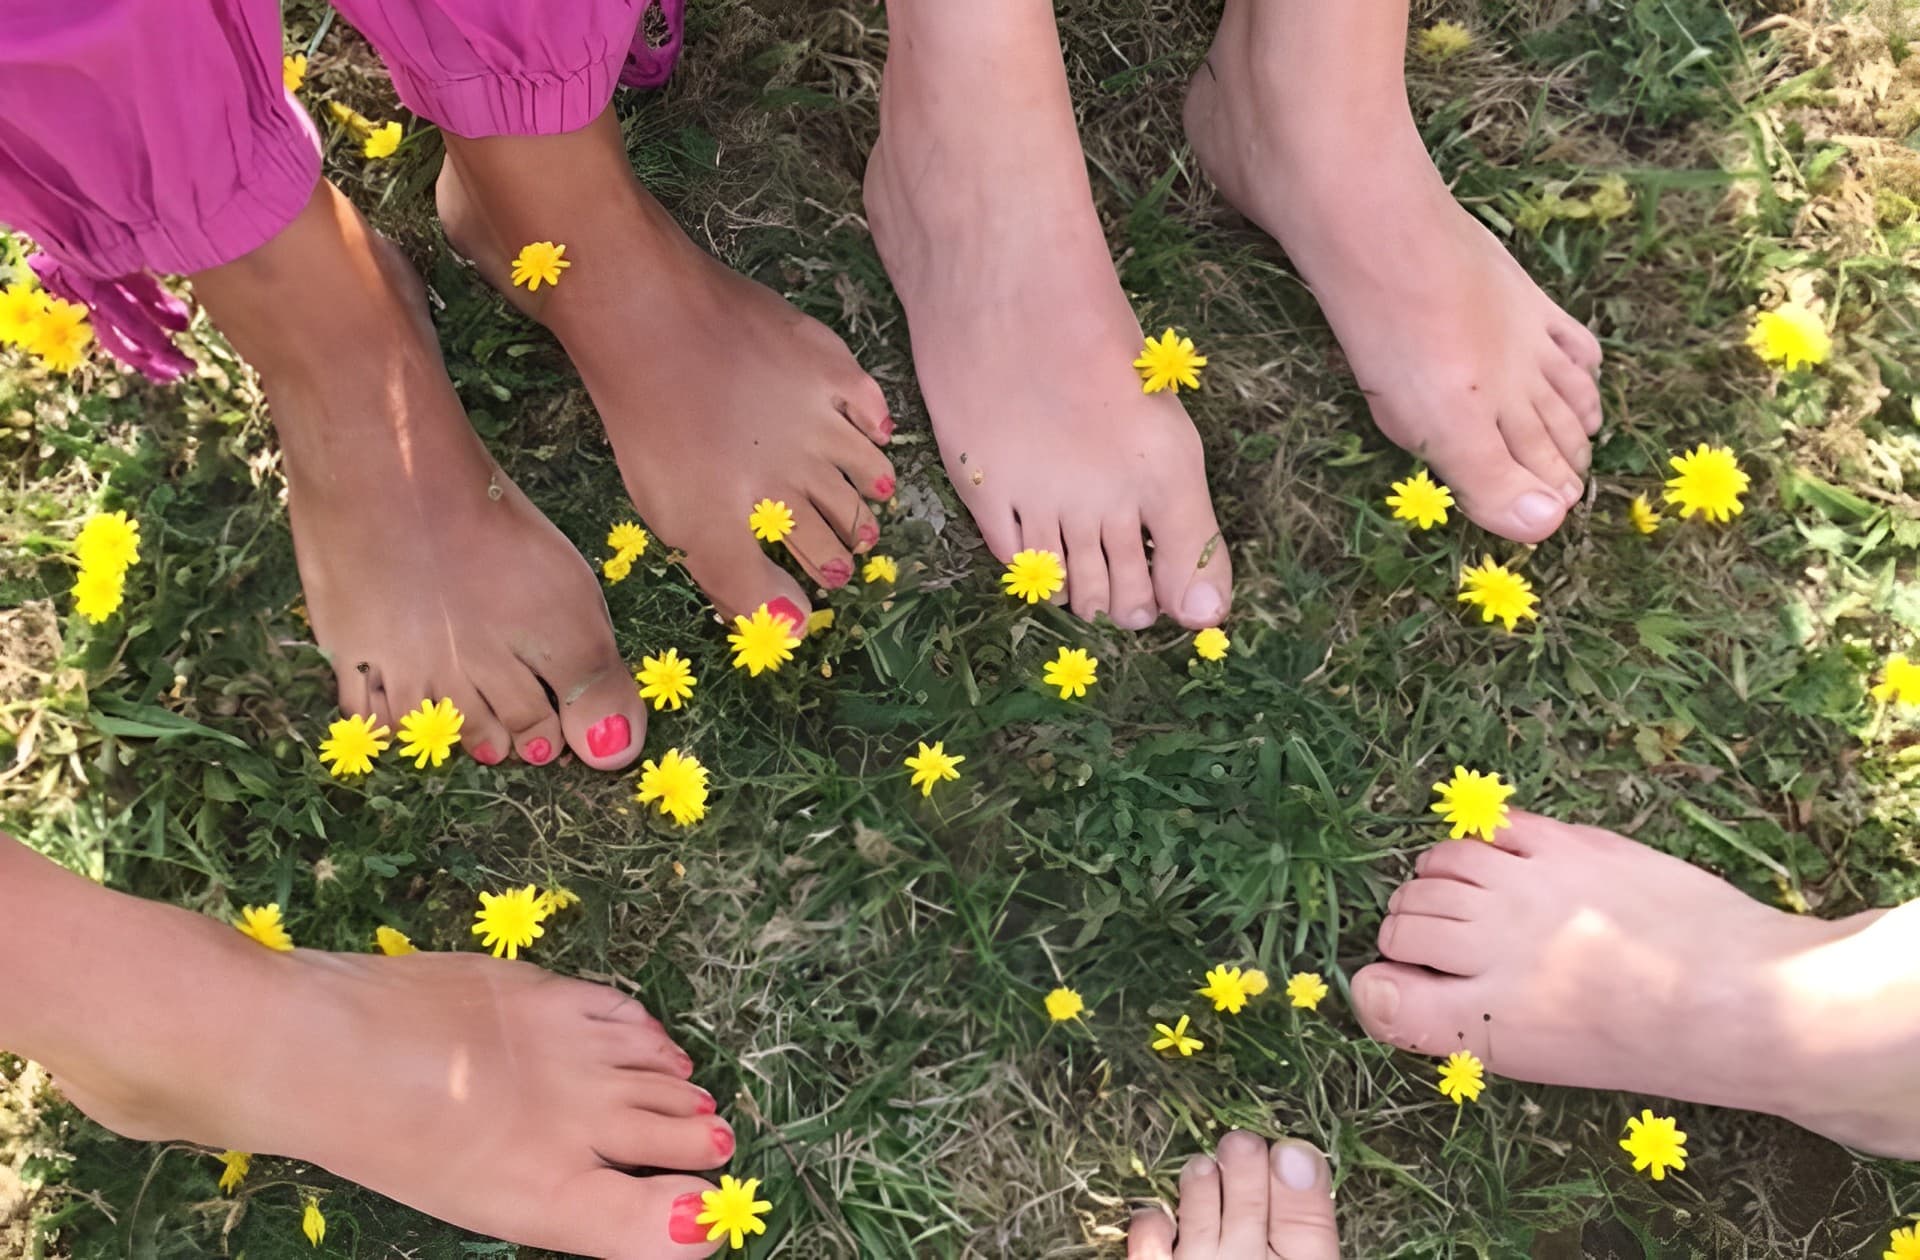 groupe de sophrologie en cercle pieds nus dans l'herbe